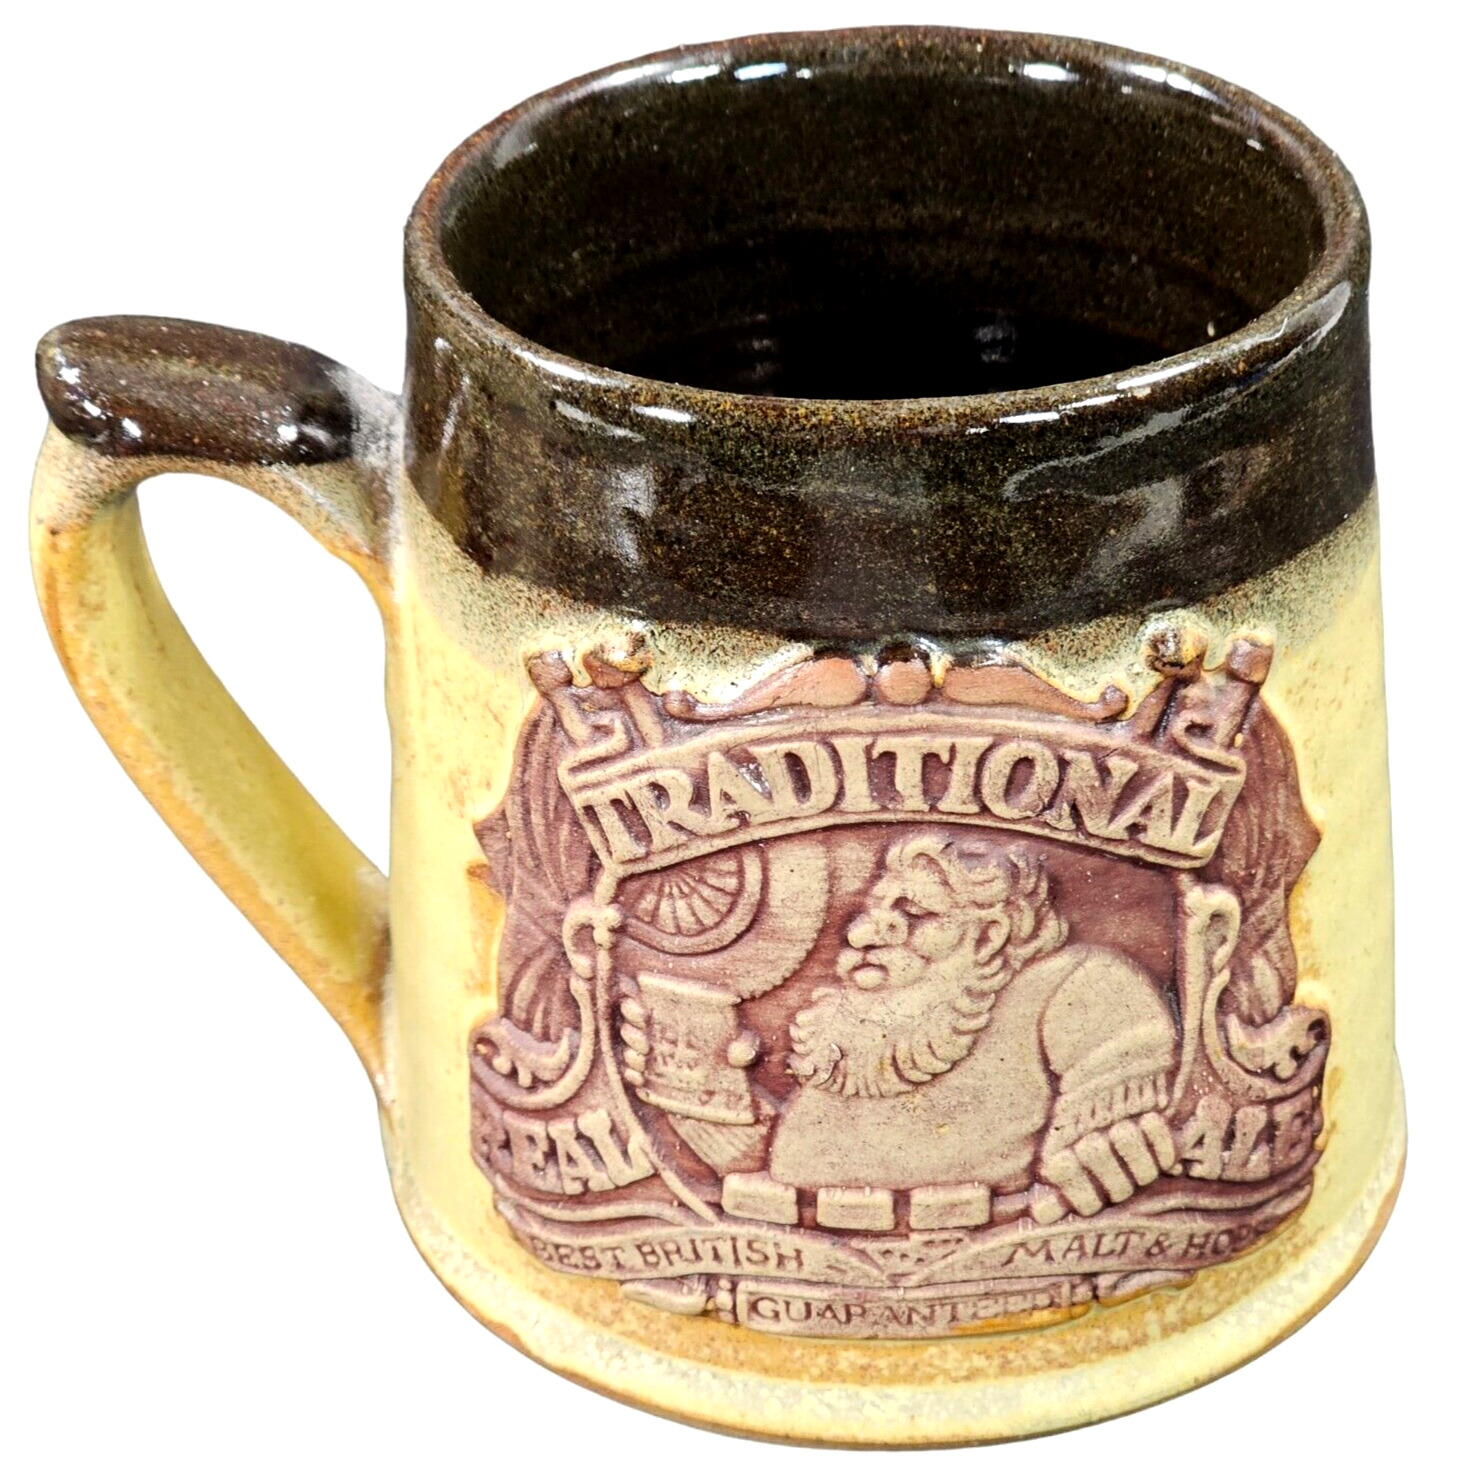 Traditional Real Ale Beer Mug Stein Stoneware Vintage